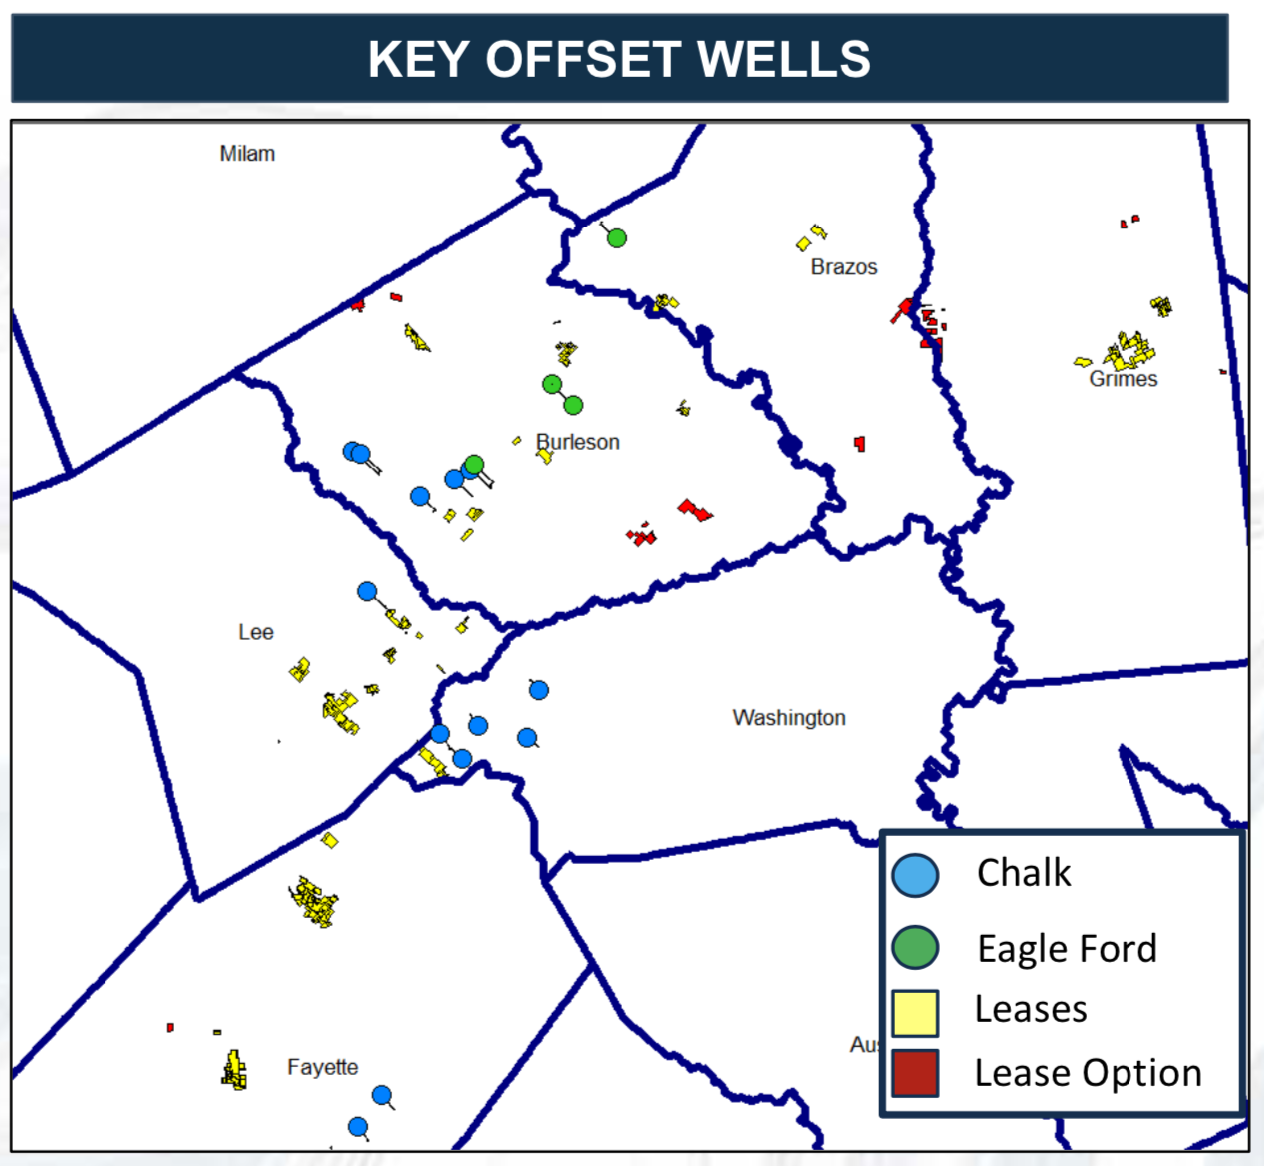 XTO Energy South Texas Eagle Ford, Austin Chalk Asset Key Offset Wells